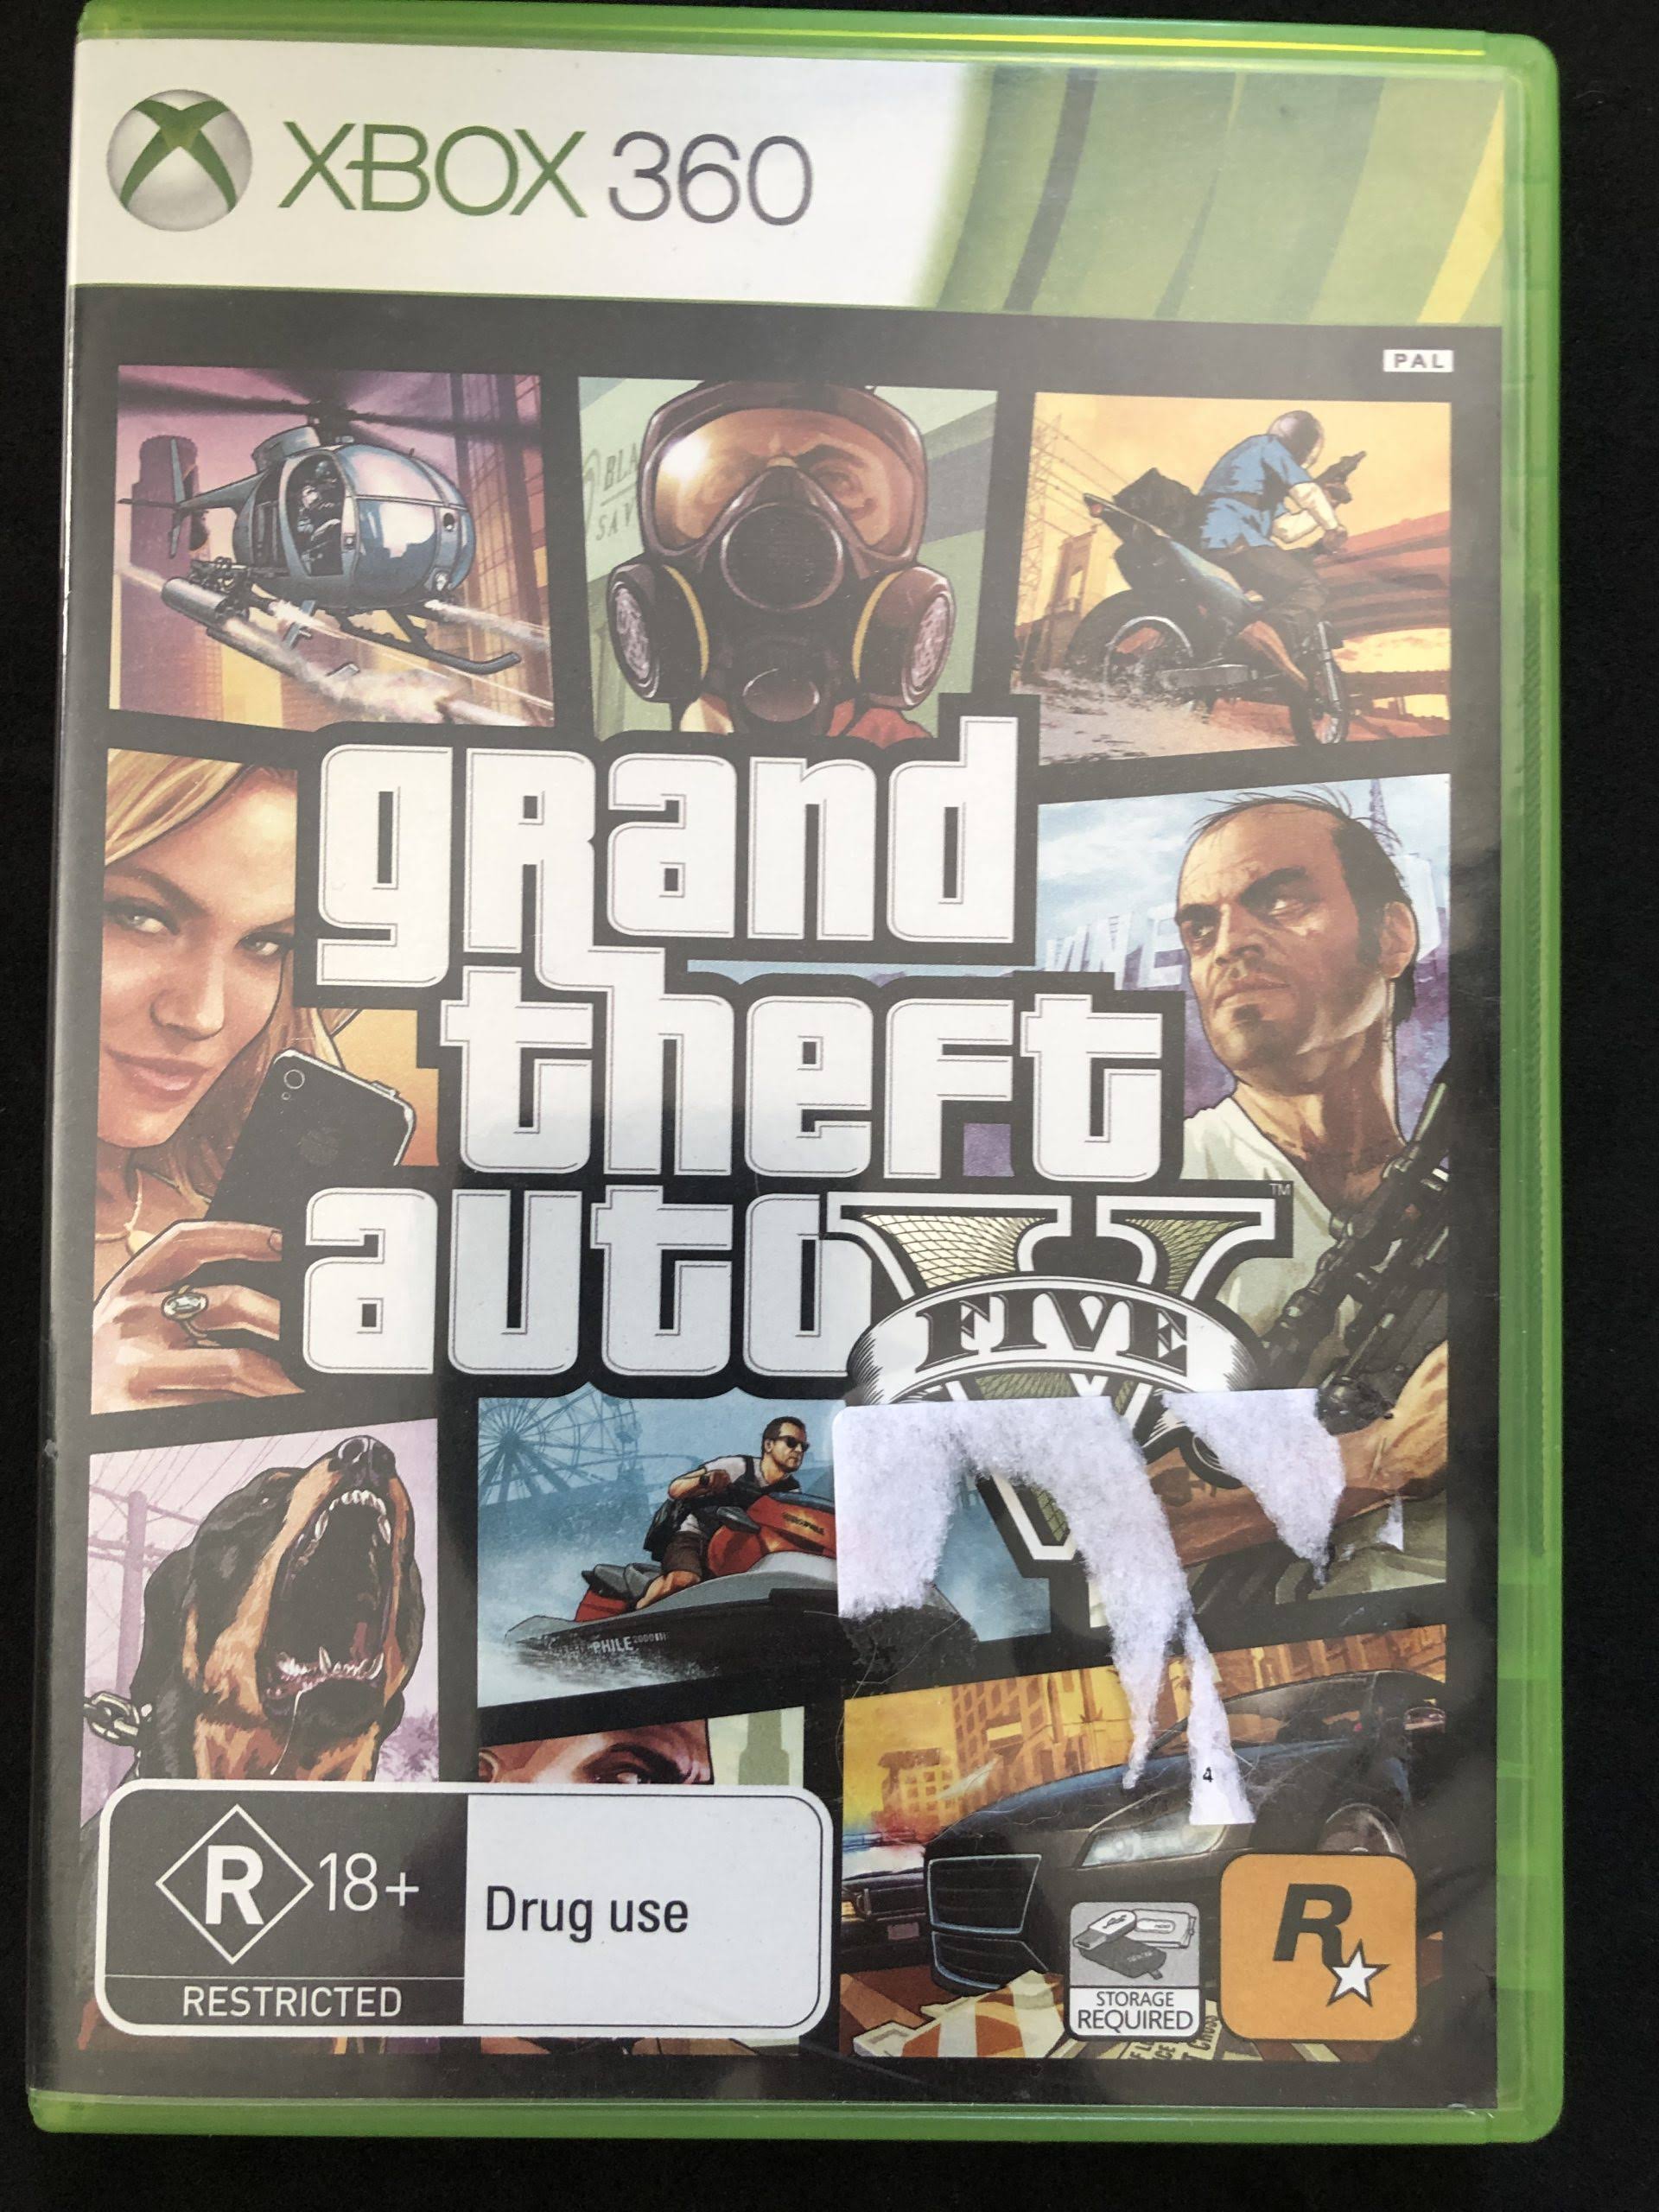 Grand Theft Auto V - PlayStation 4